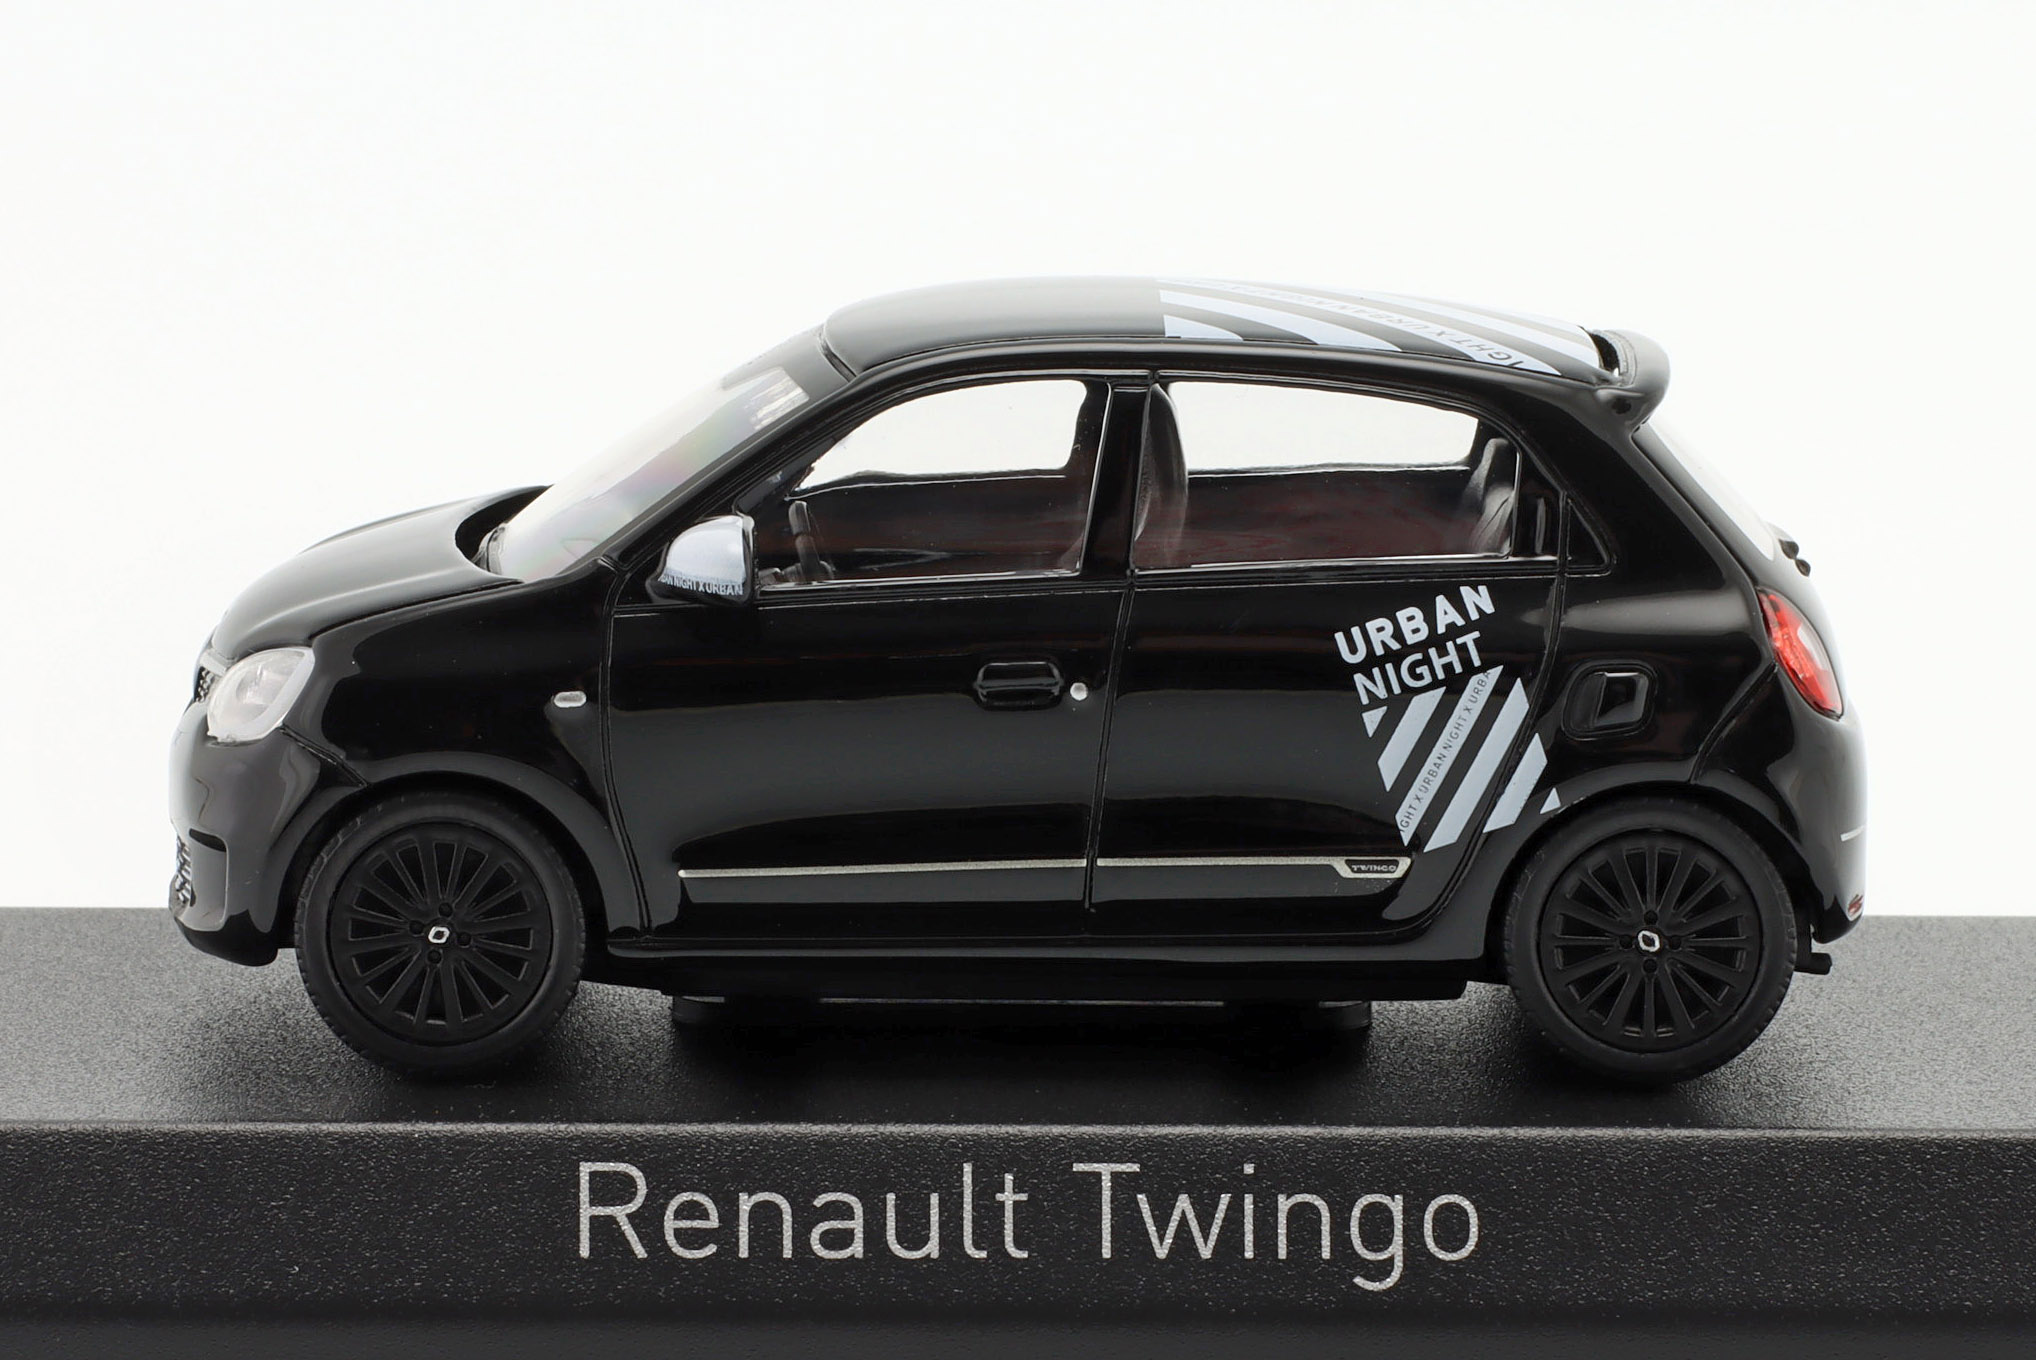 Renault Twingo Urban Night 2021 Black